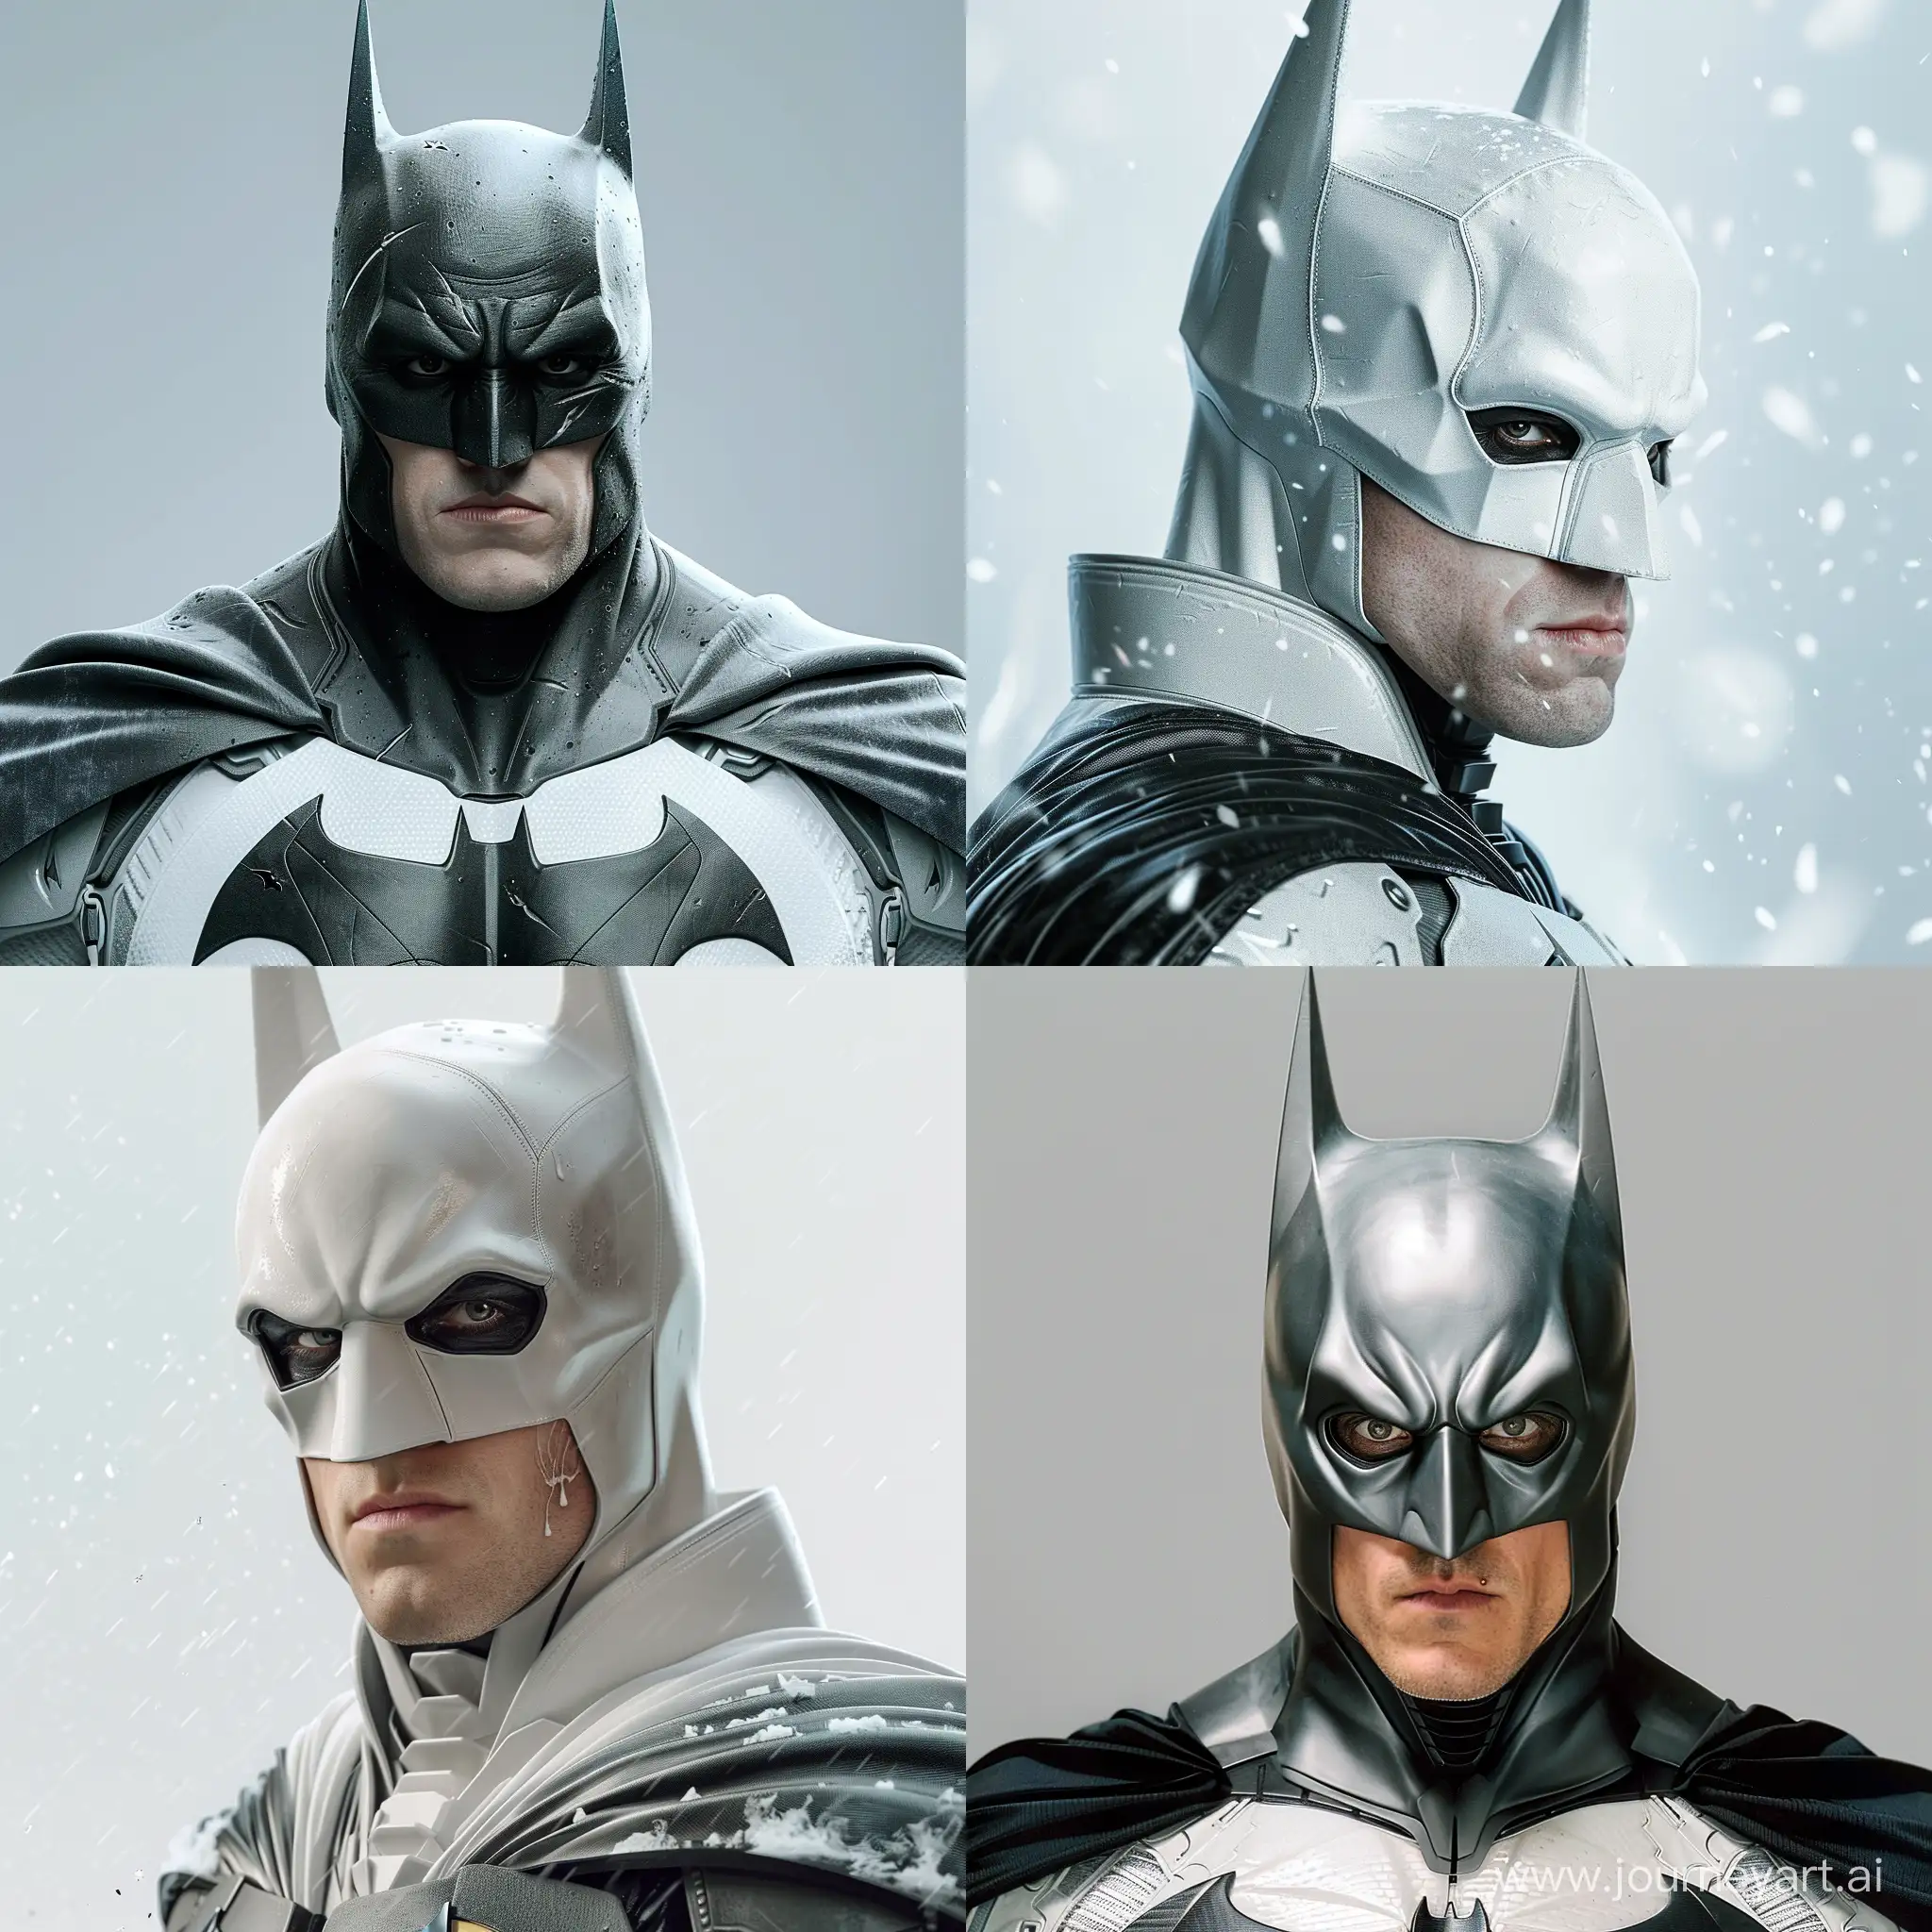 Christian-Bale-as-Batman-in-White-Photorealistic-Movie-Scene